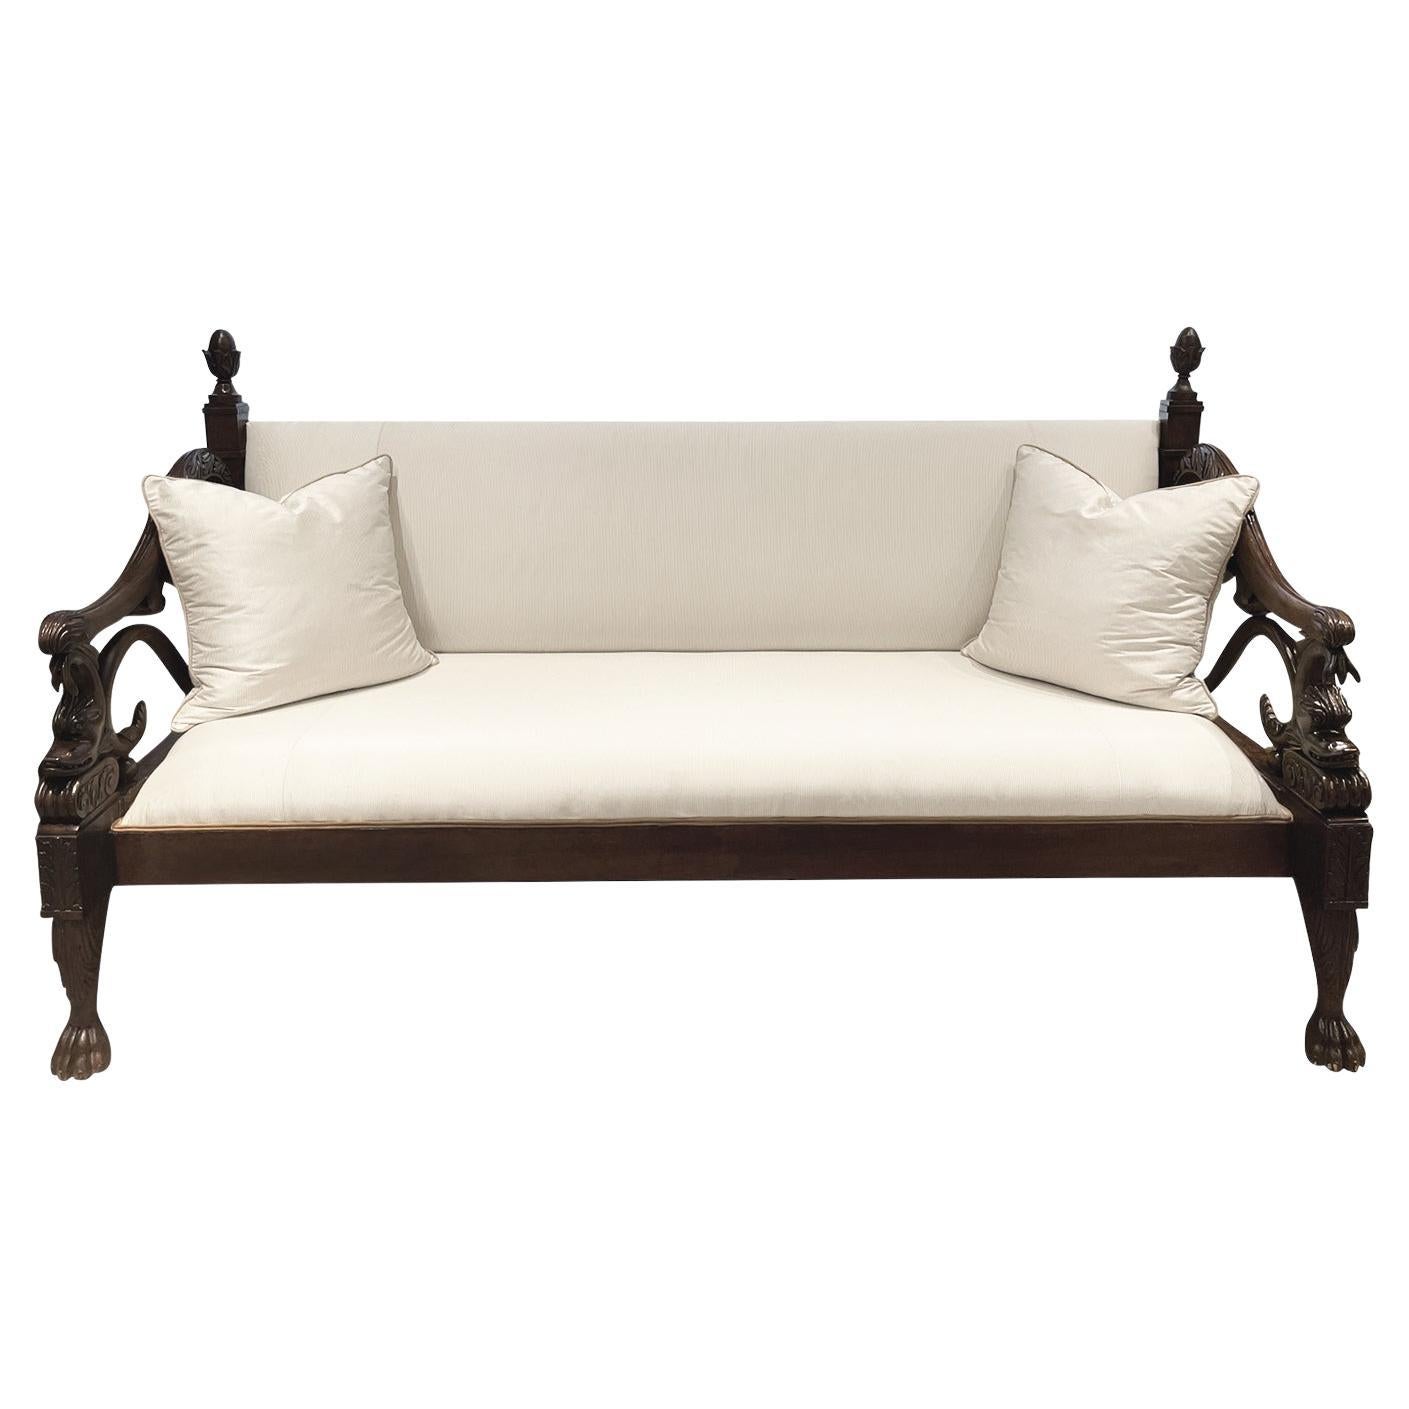 19th Century Baltic Mahogany Long Bench - Antique Empire Silk Sofa, Canapé For Sale